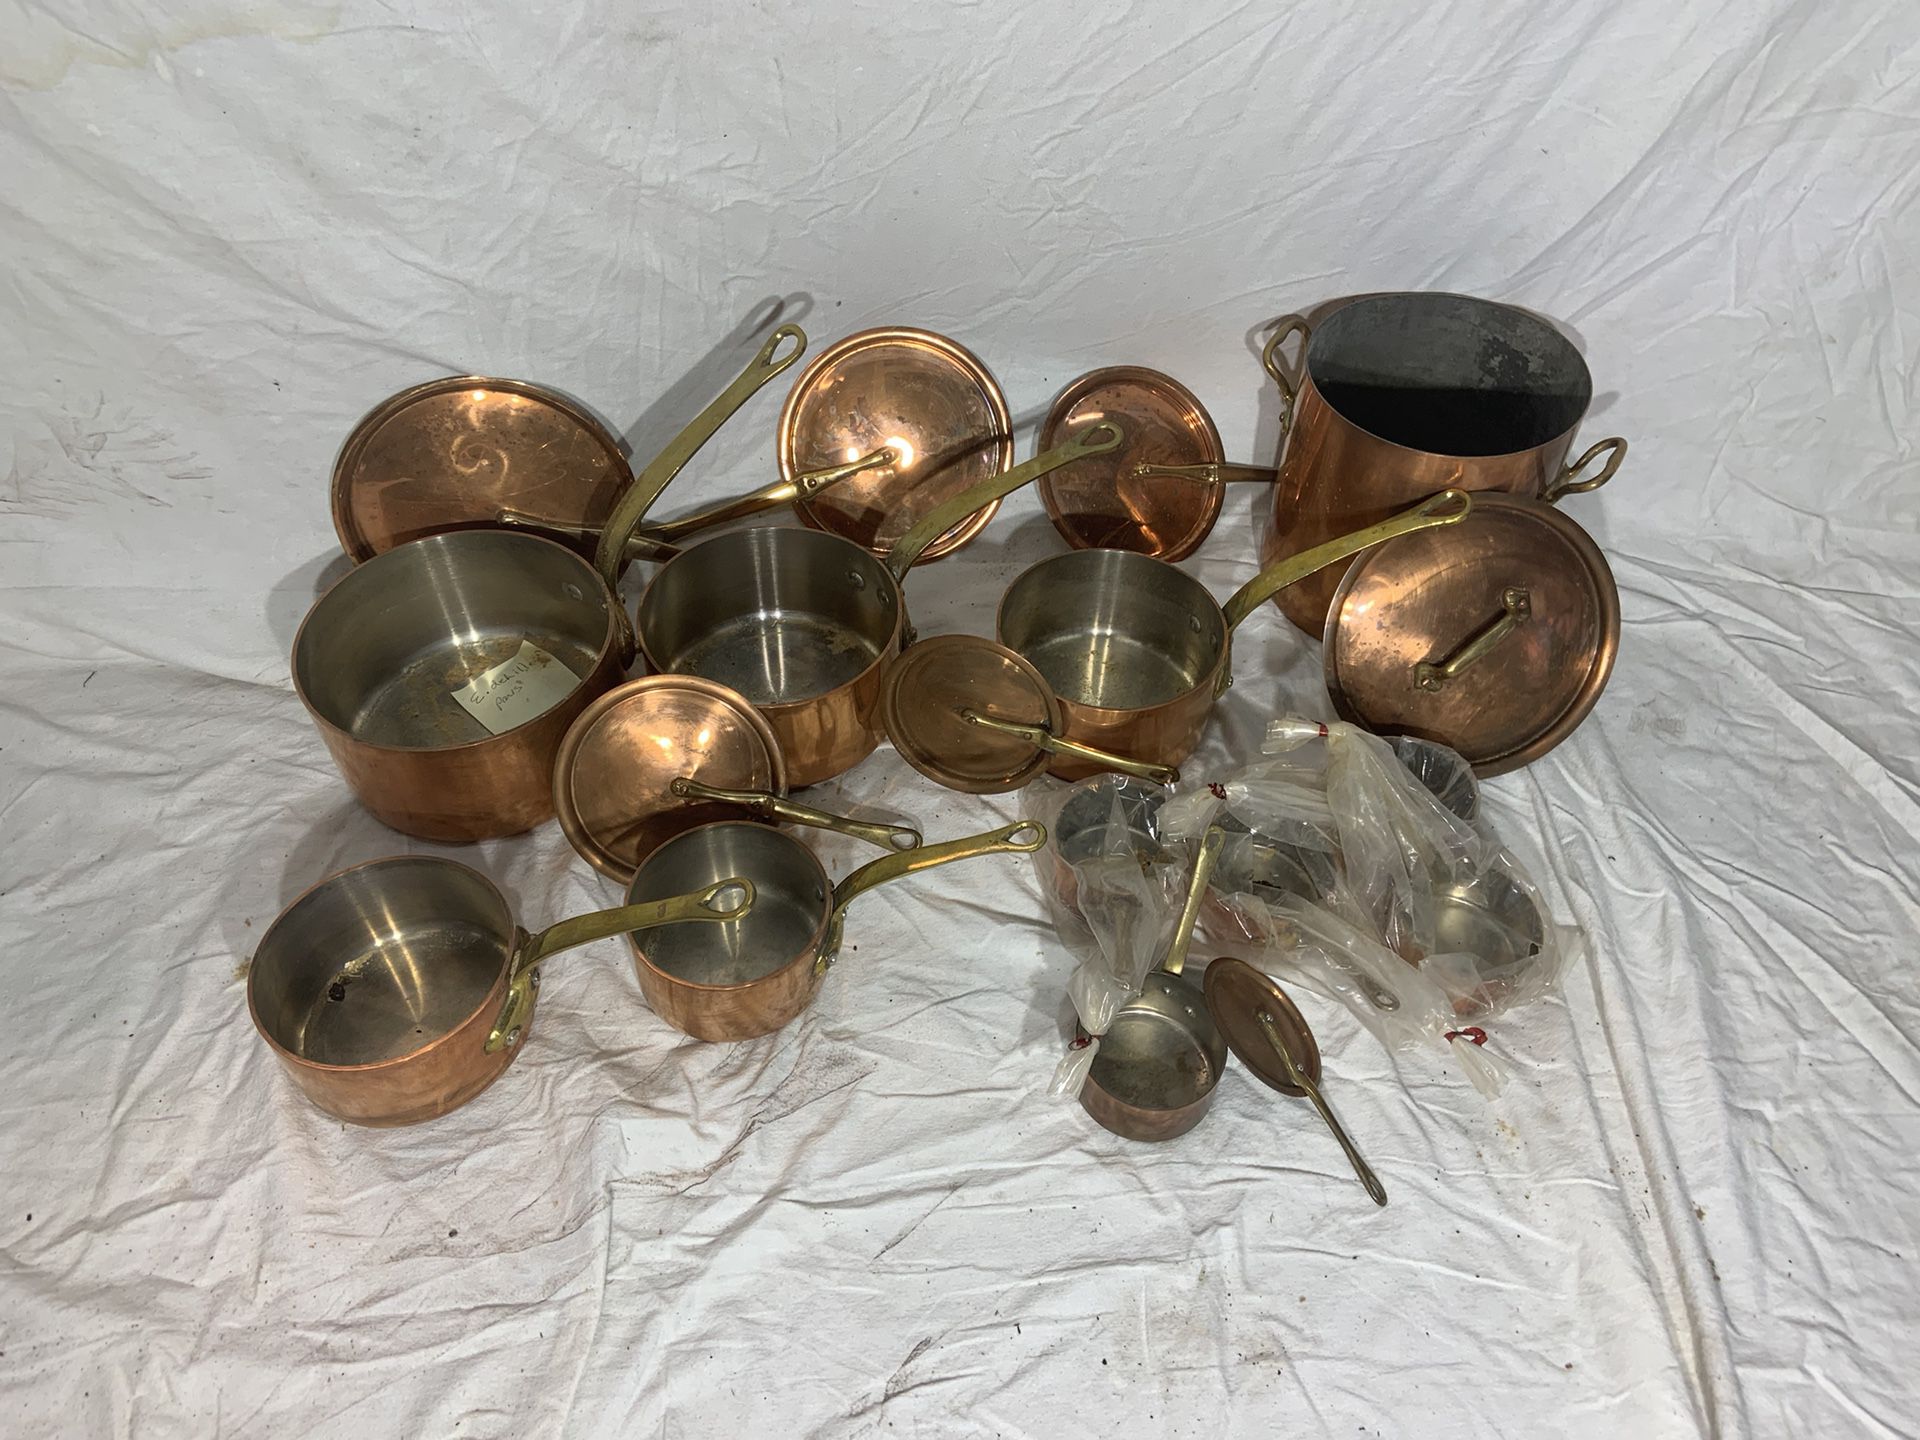 11 Copper Pans And Lids